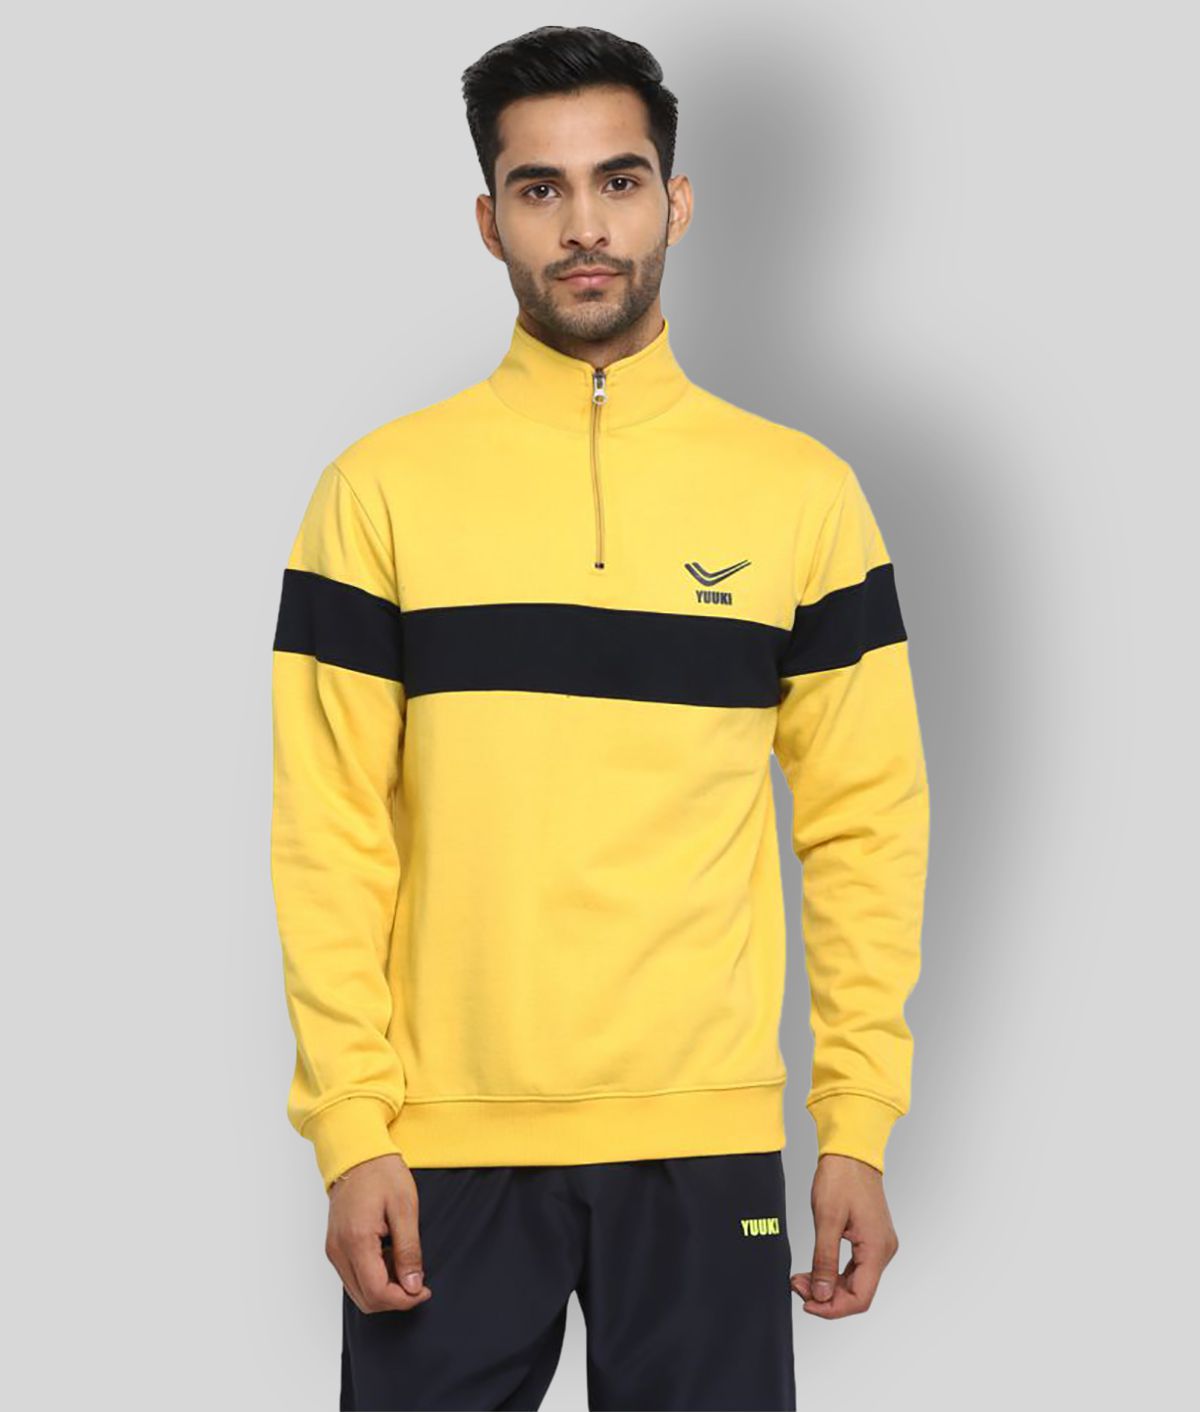     			YUUKI Yellow Polyester Sweatshirt